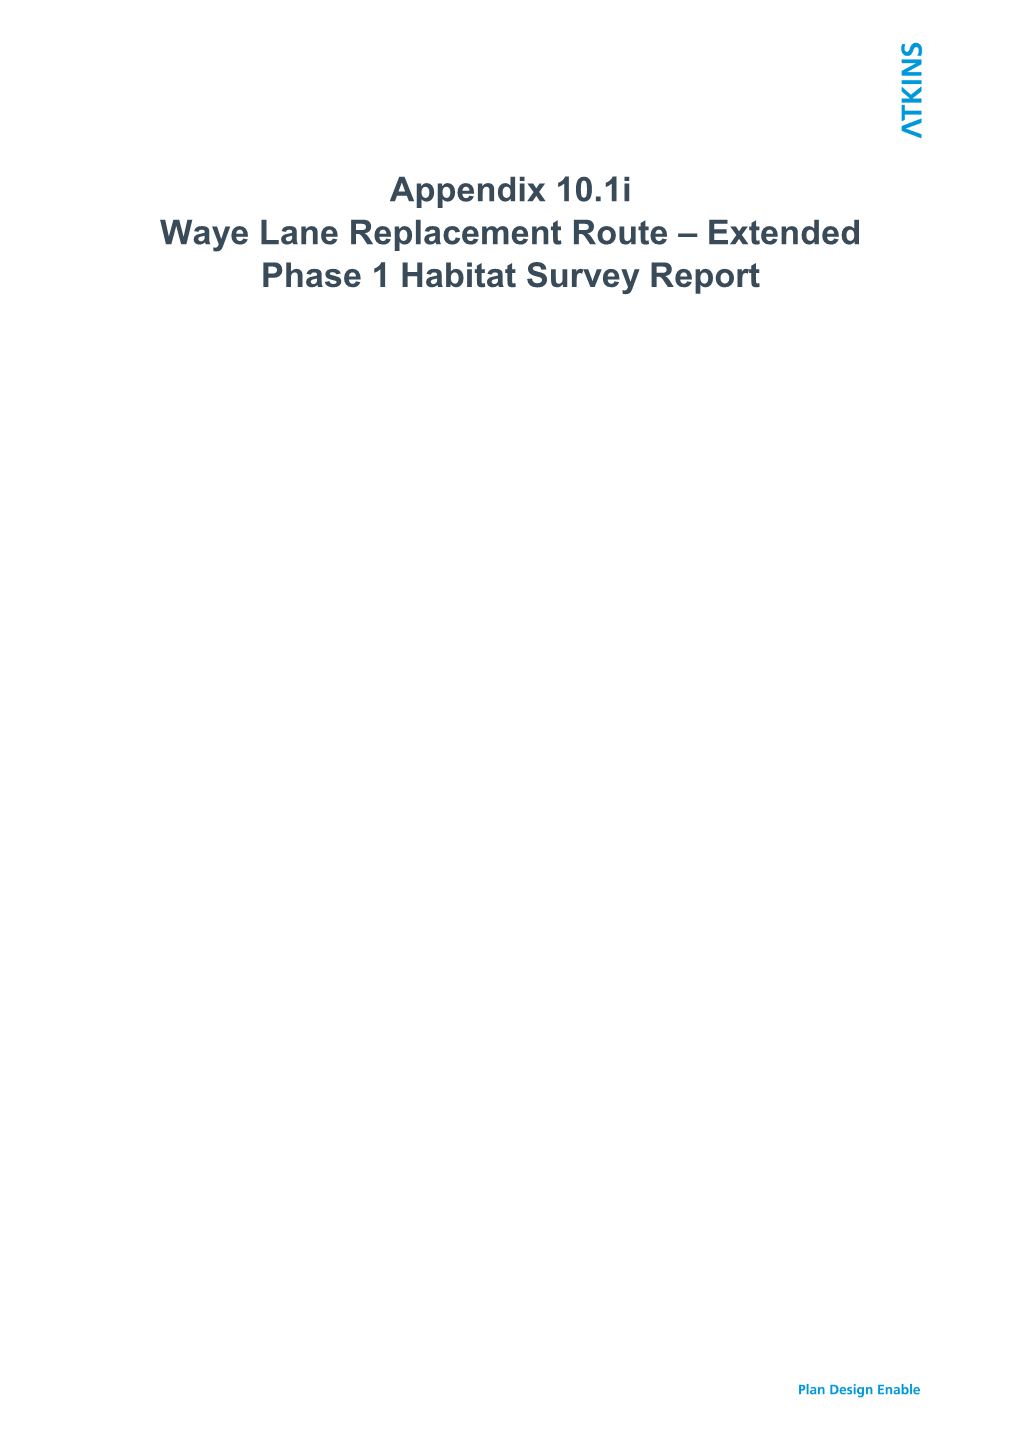 Extended Phase 1 Habitat Survey Report